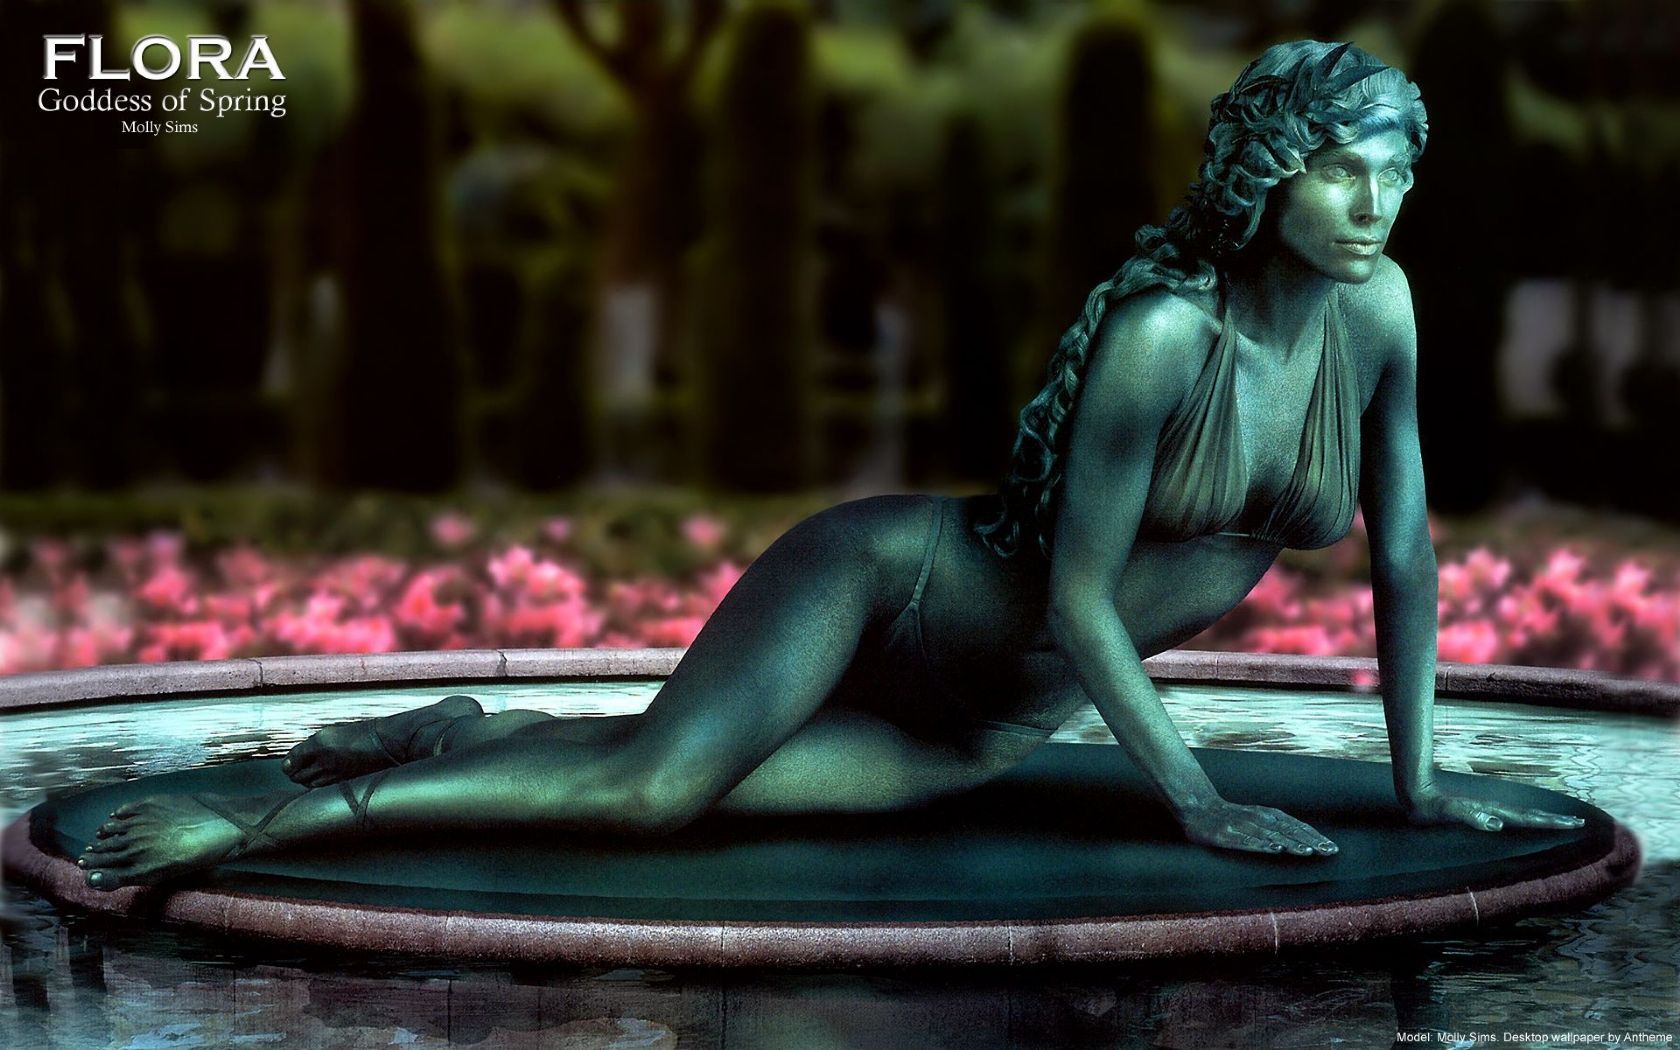 Flora Goddess of Spring by Antheme